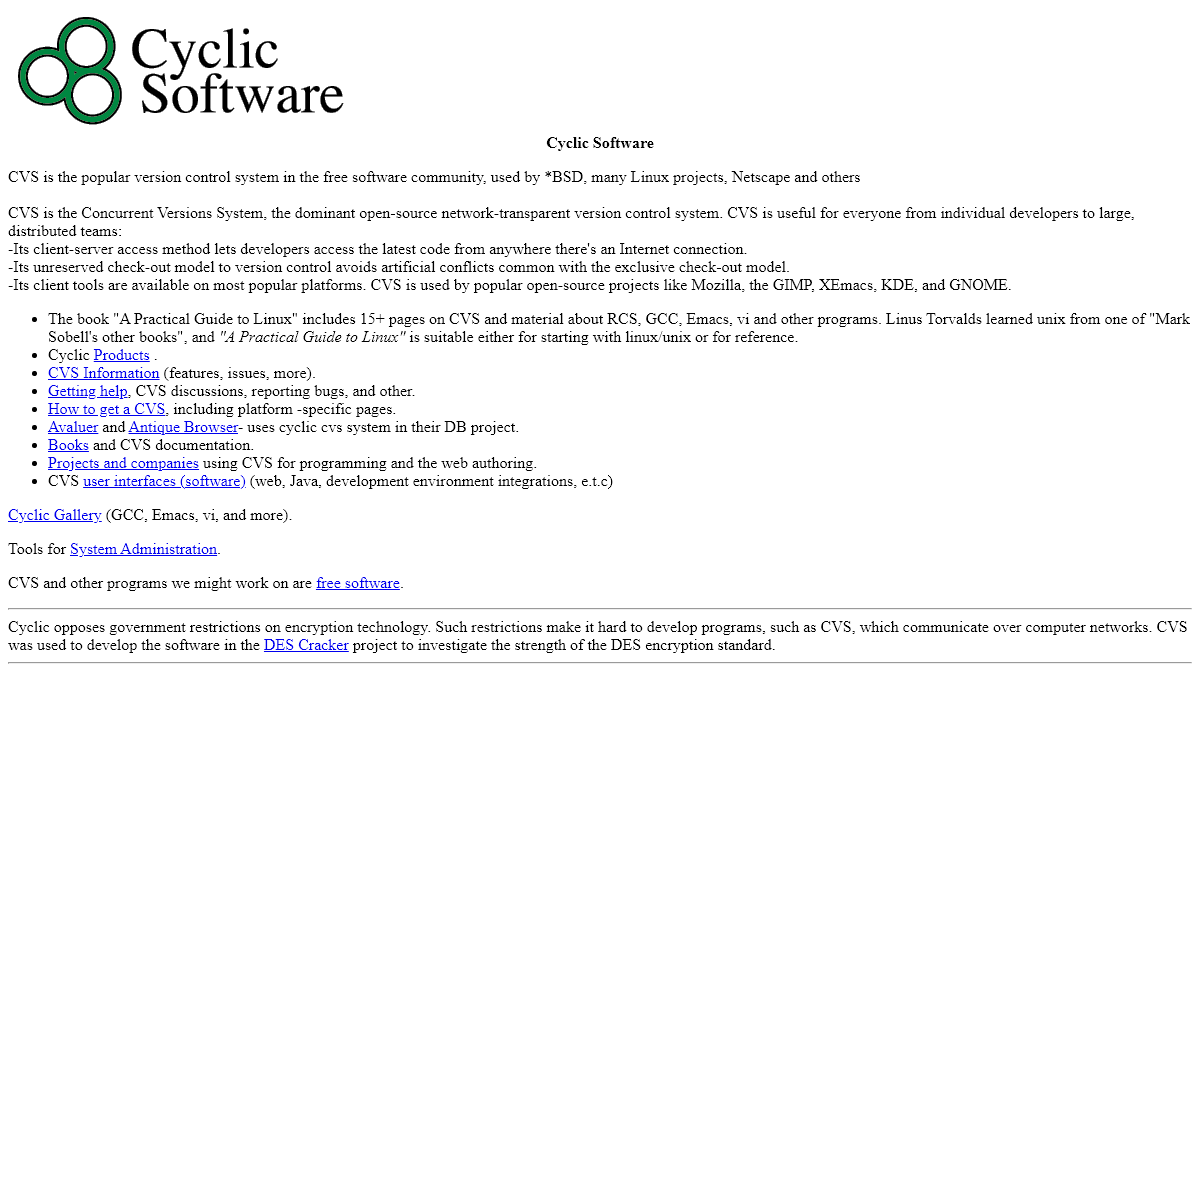 A complete backup of cyclic.com